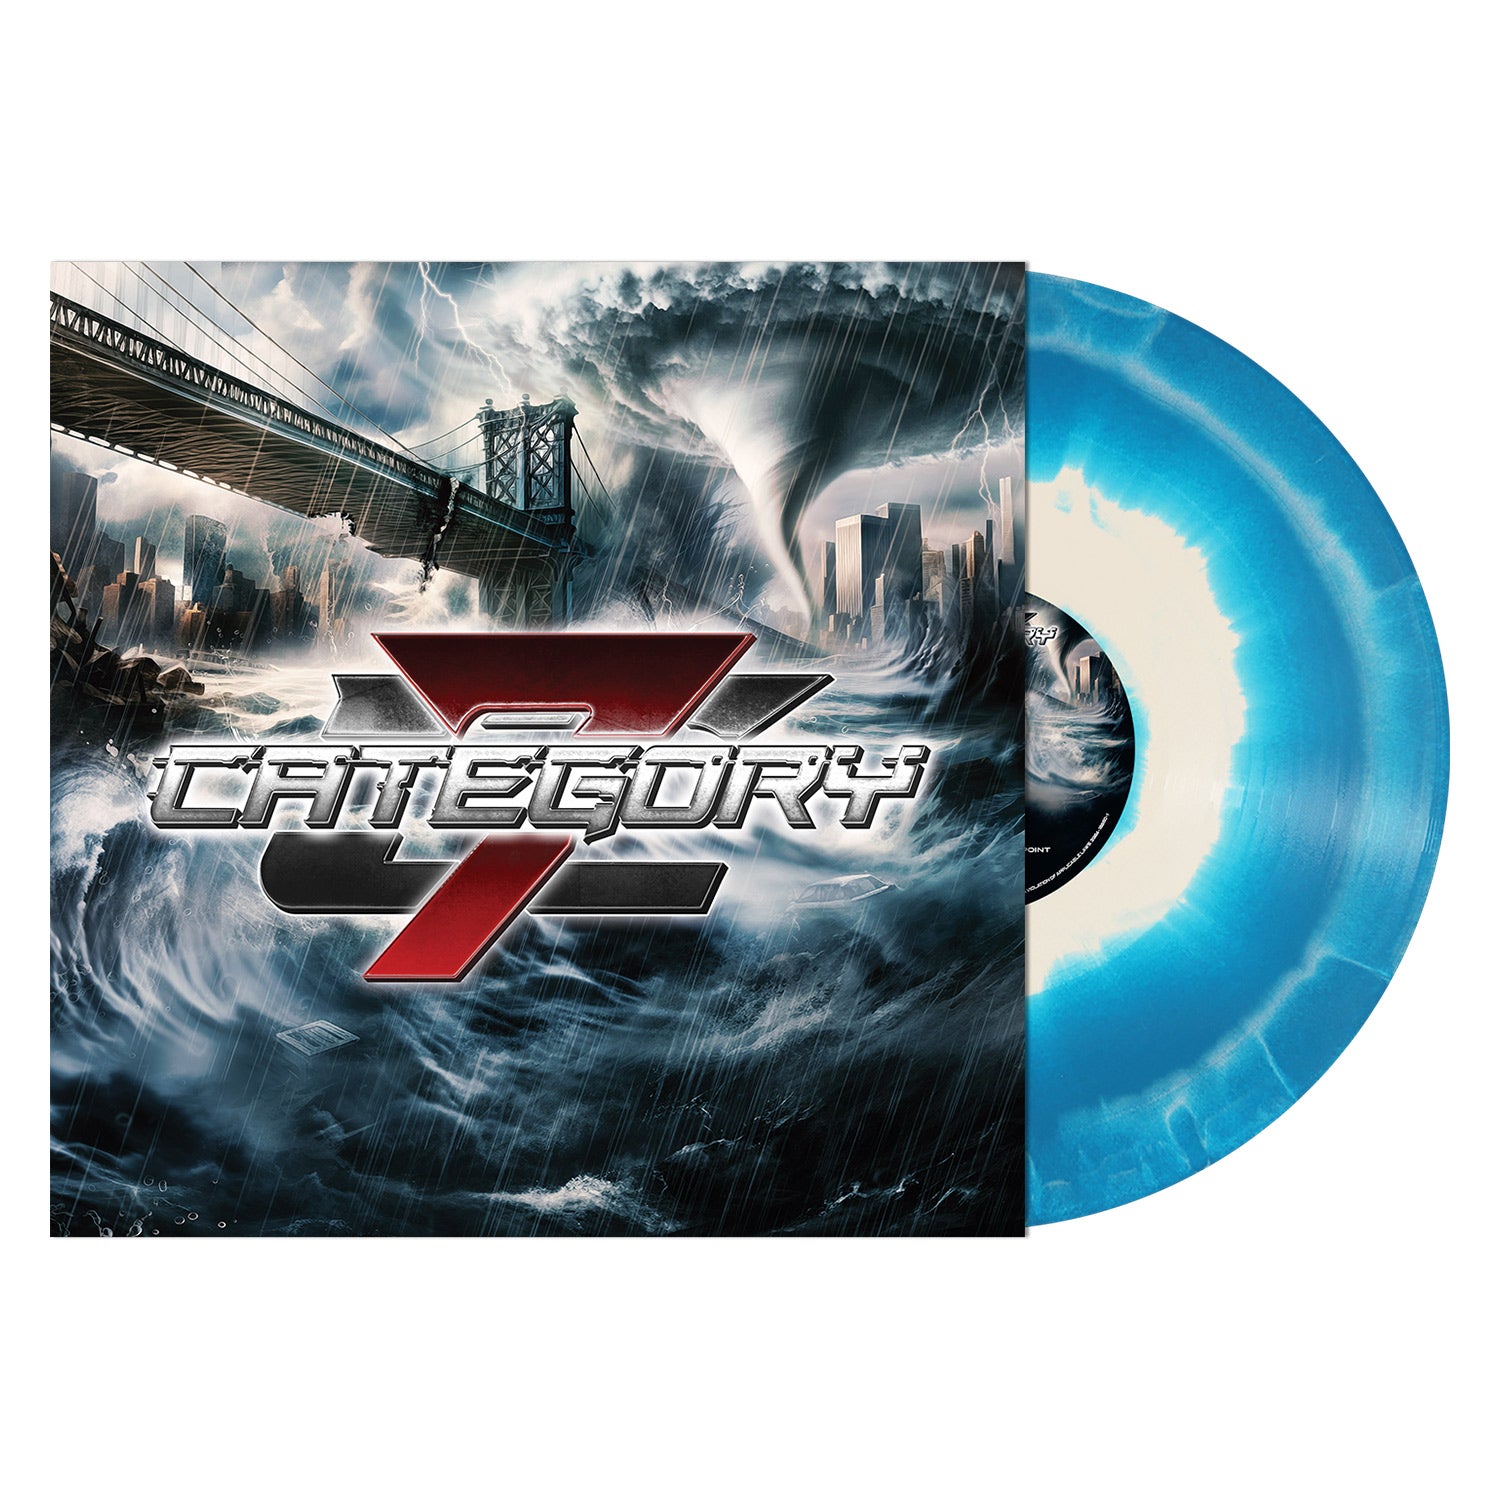 Category 7 "Category 7" 'Storm Surge' Blue / White Melt Vinyl (Ltd to 700 copies) - PRE-ORDER